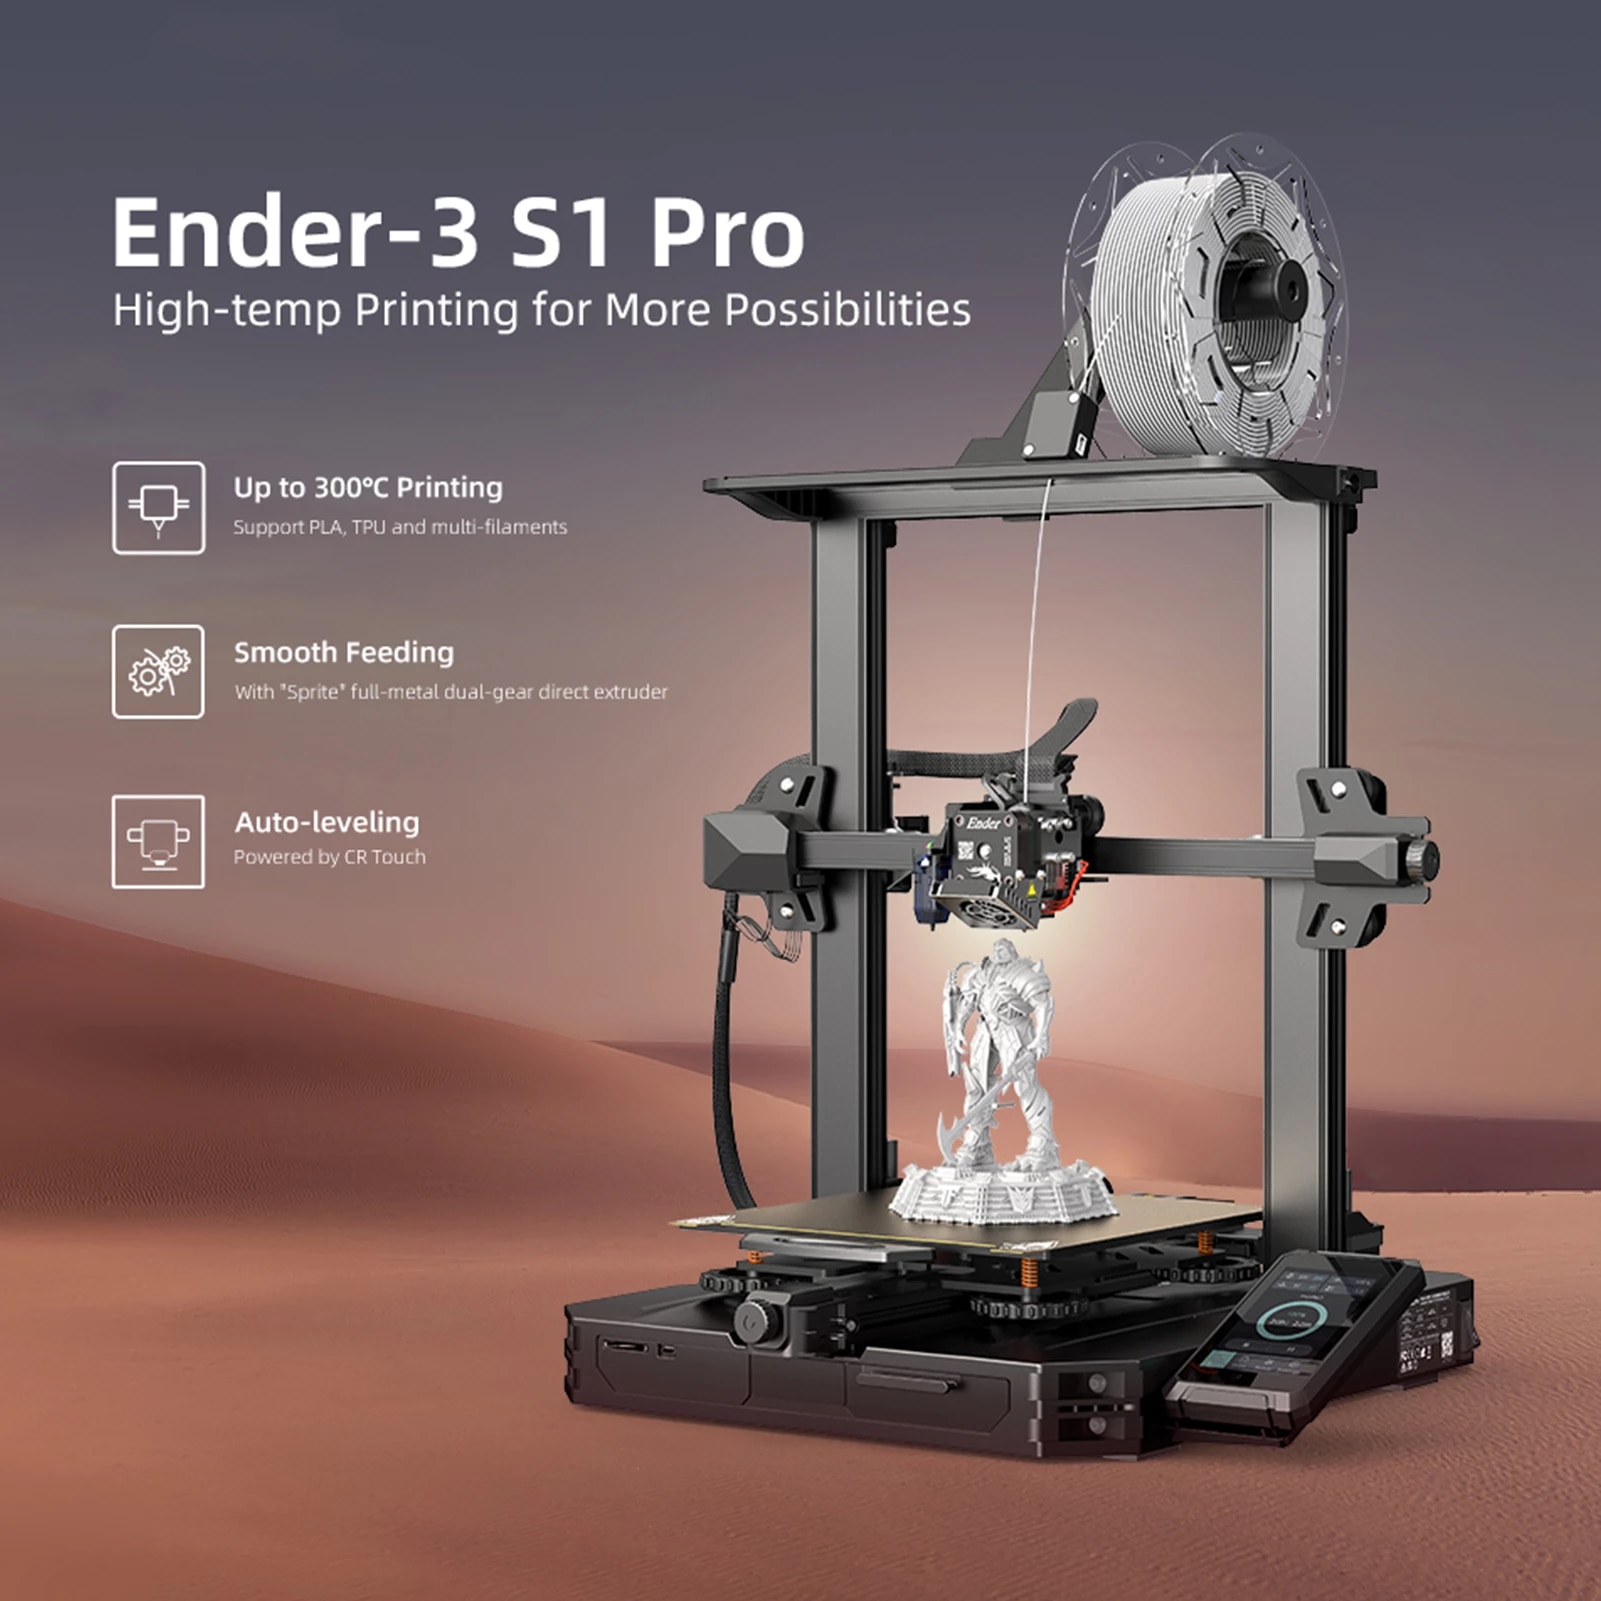 world toy scream Ender 3 S1 Pro המתקדמת ביותר! - ספיידר -מדפסות תלת מימד